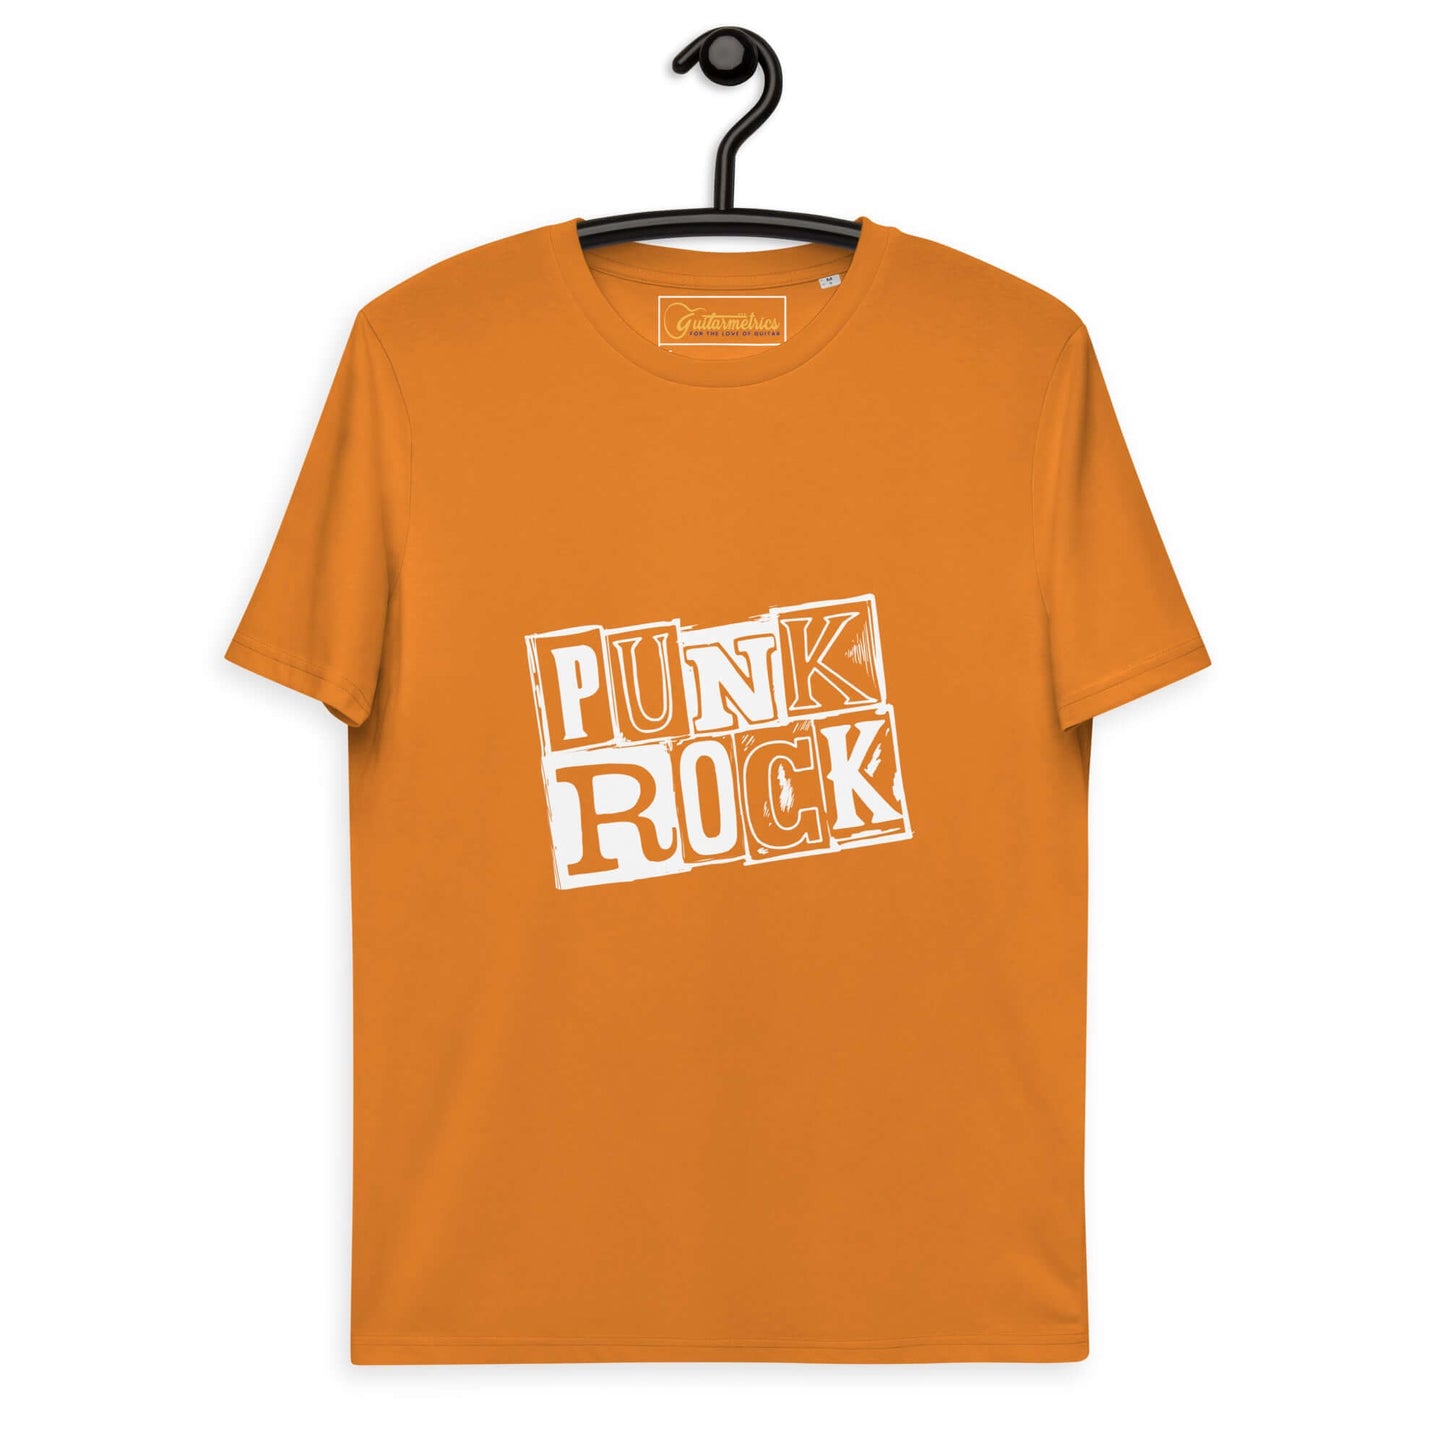 Punk Rock Unisex organic cotton t-shirt Day Fall guitarmetrics